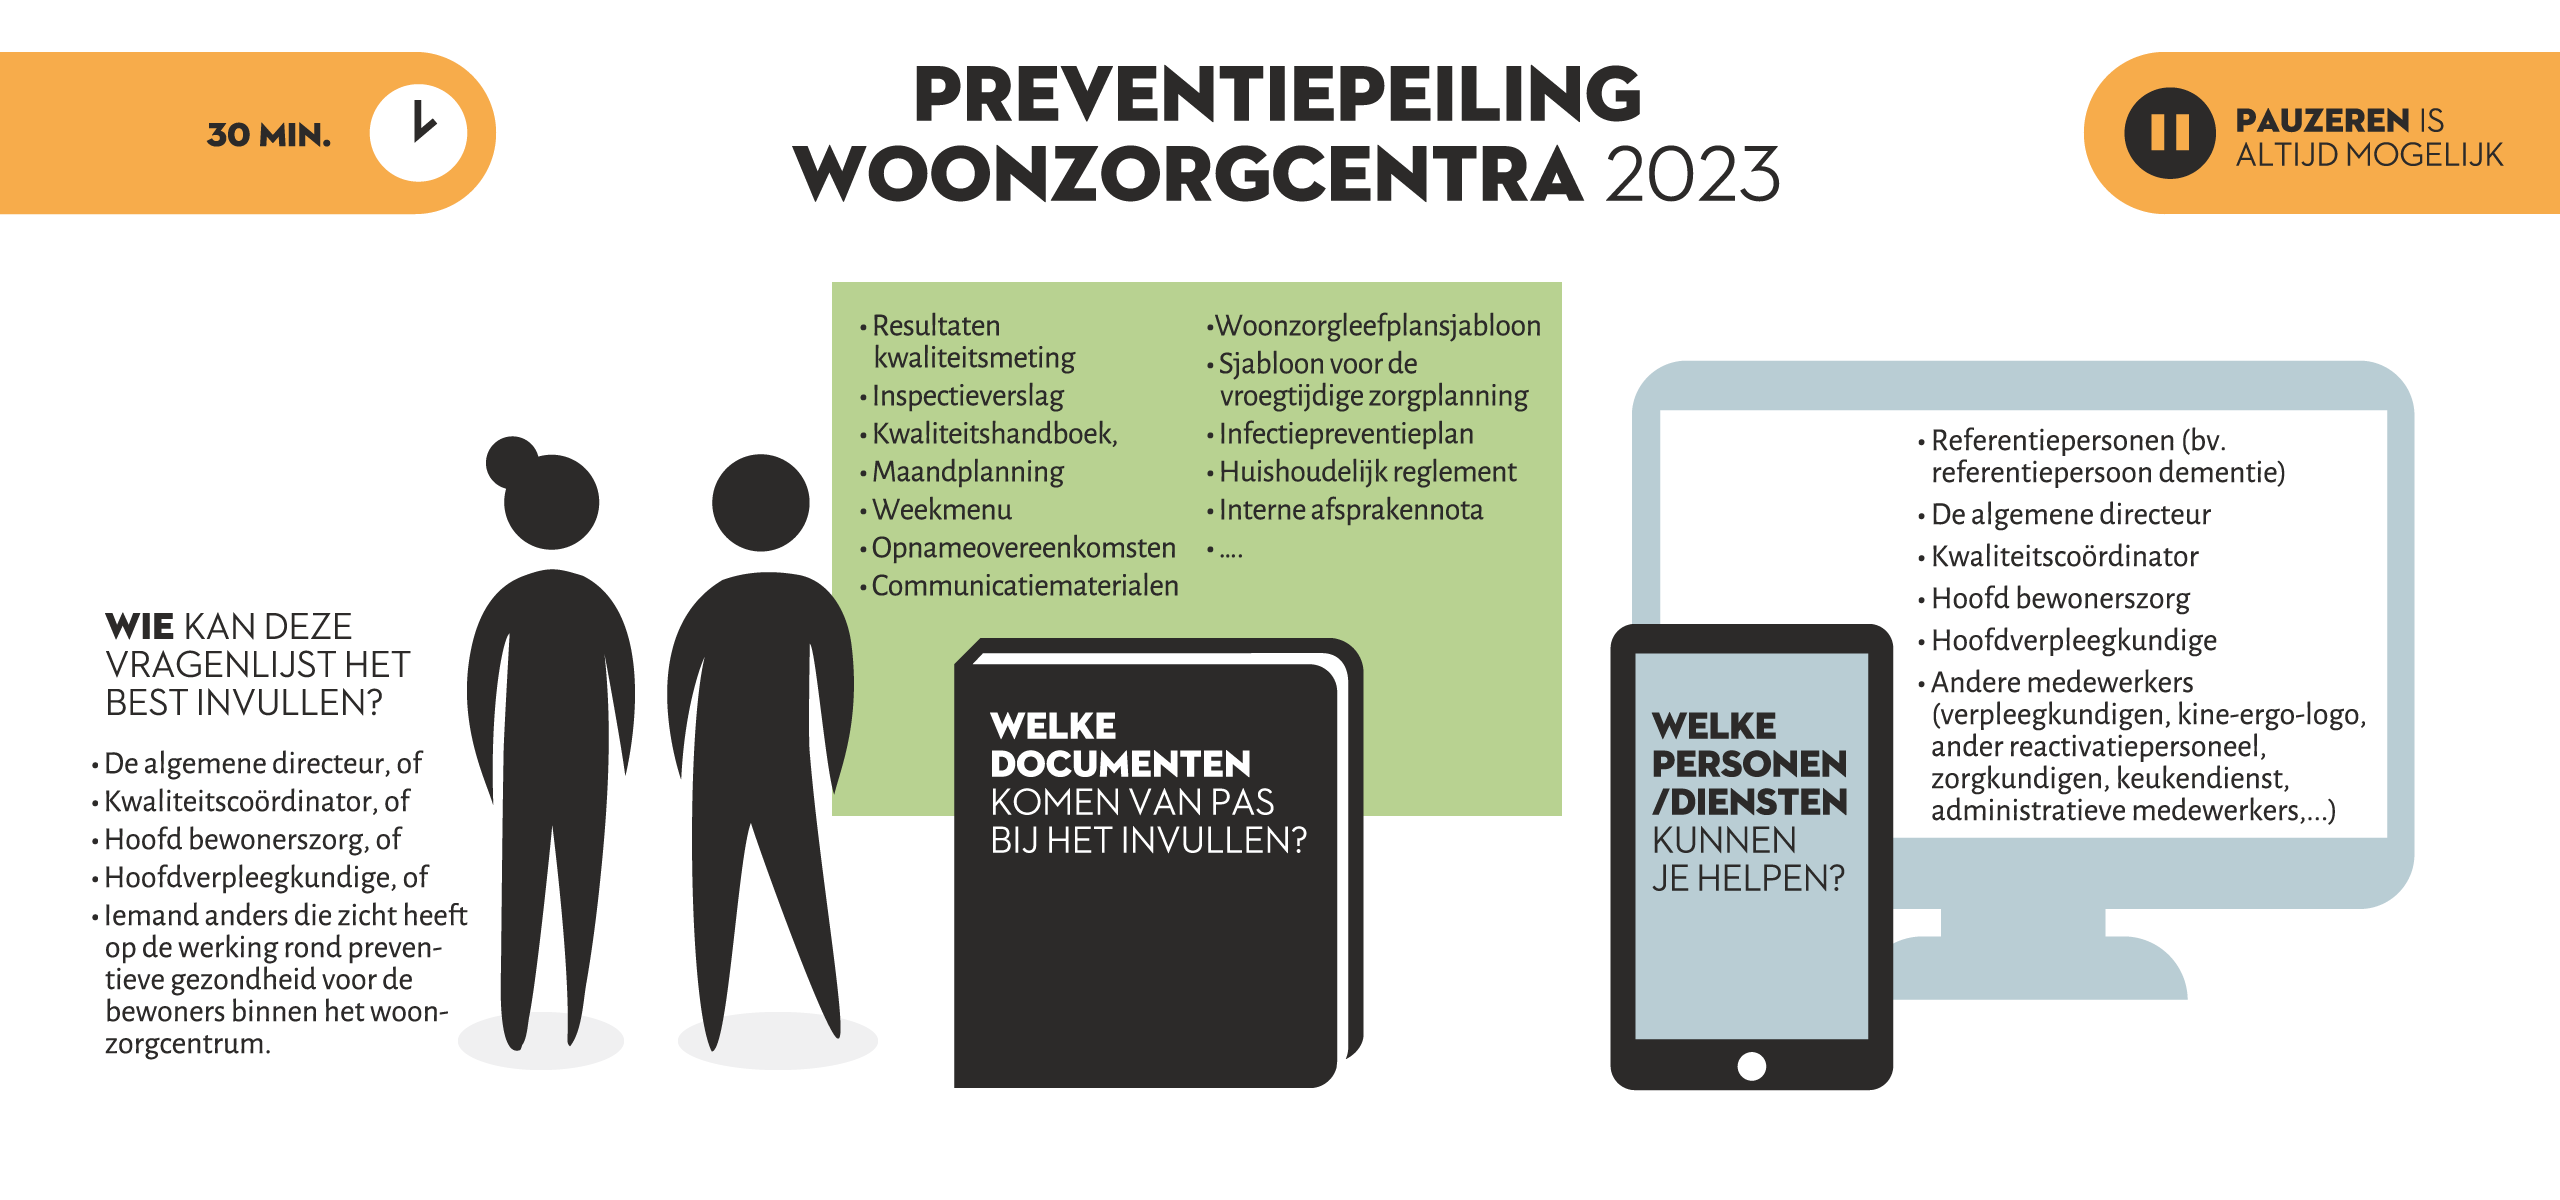 Preventiepeiling 2022-23 instructie-infographic woonzorgcentra